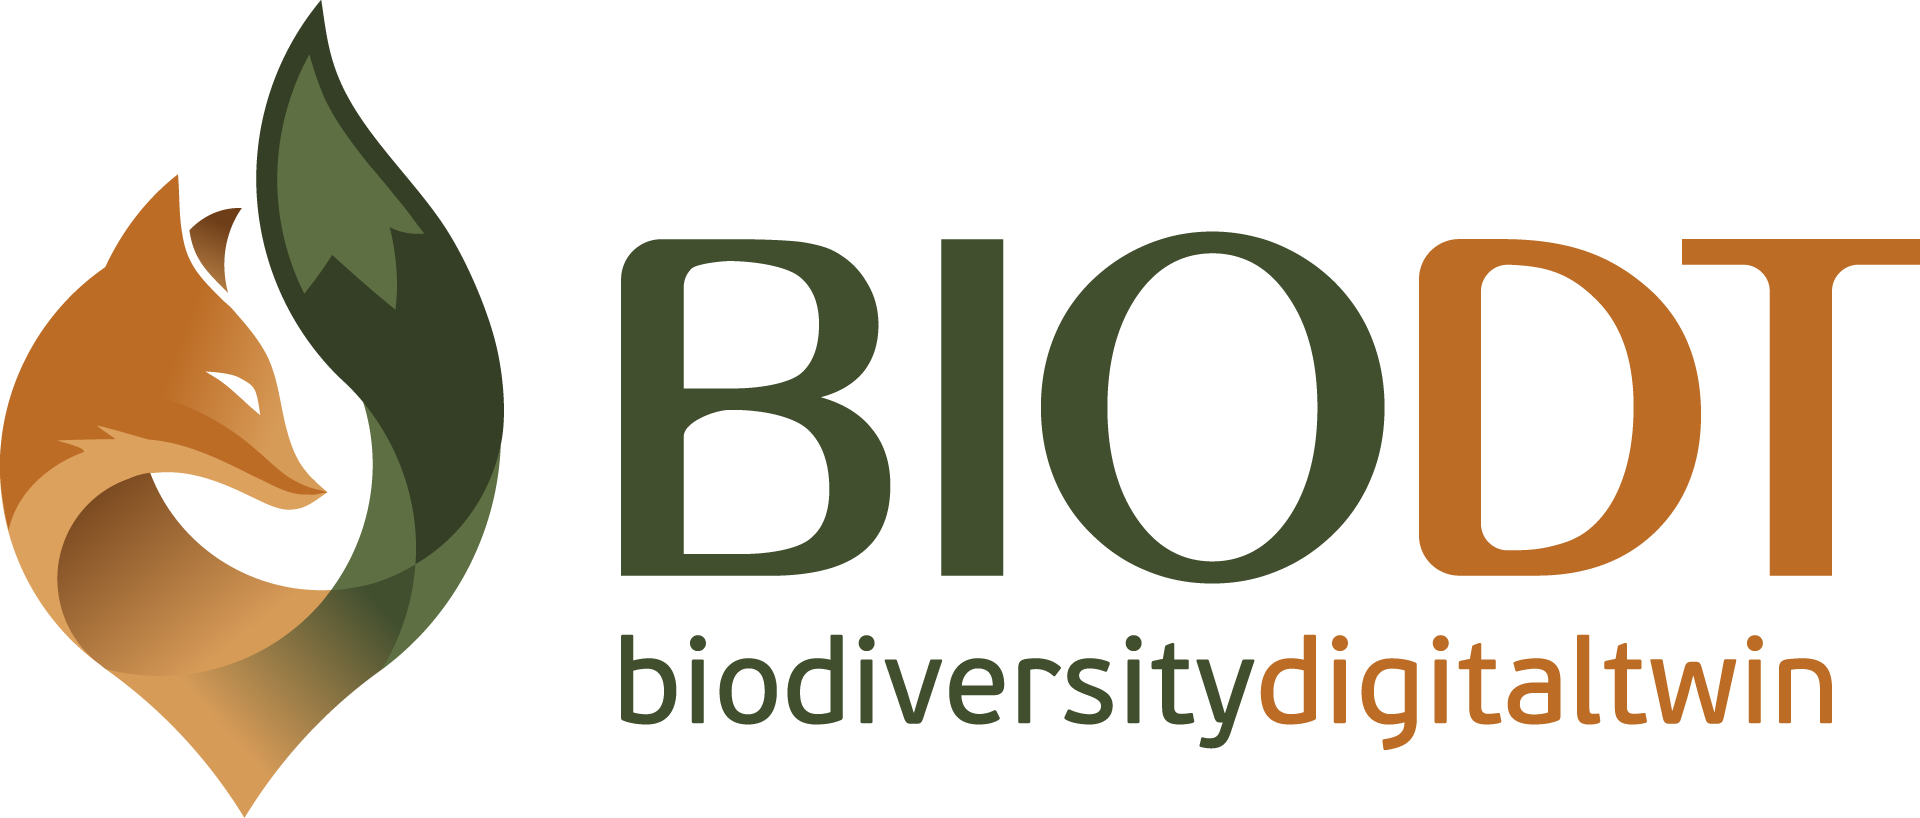 BioDT project logo